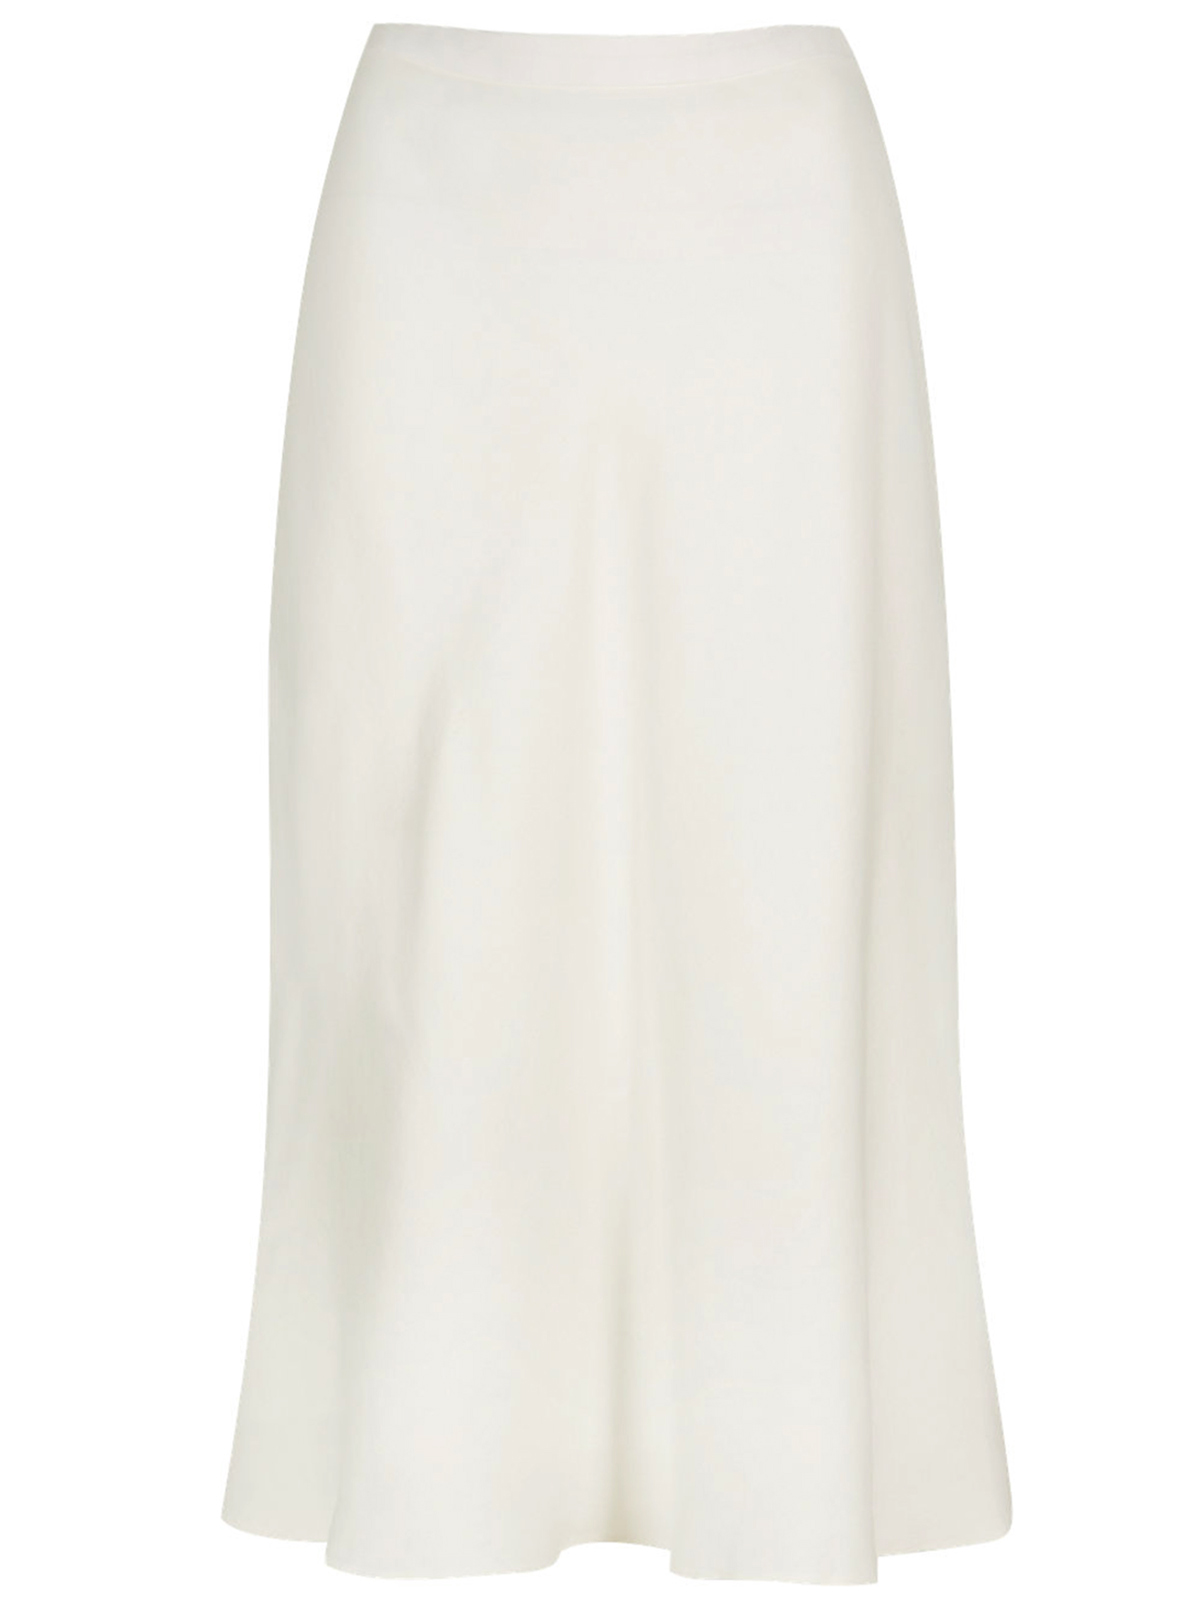 Marks and Spencer - - M&5 IVORY Linen Blend A-Line Skirt - Size 14